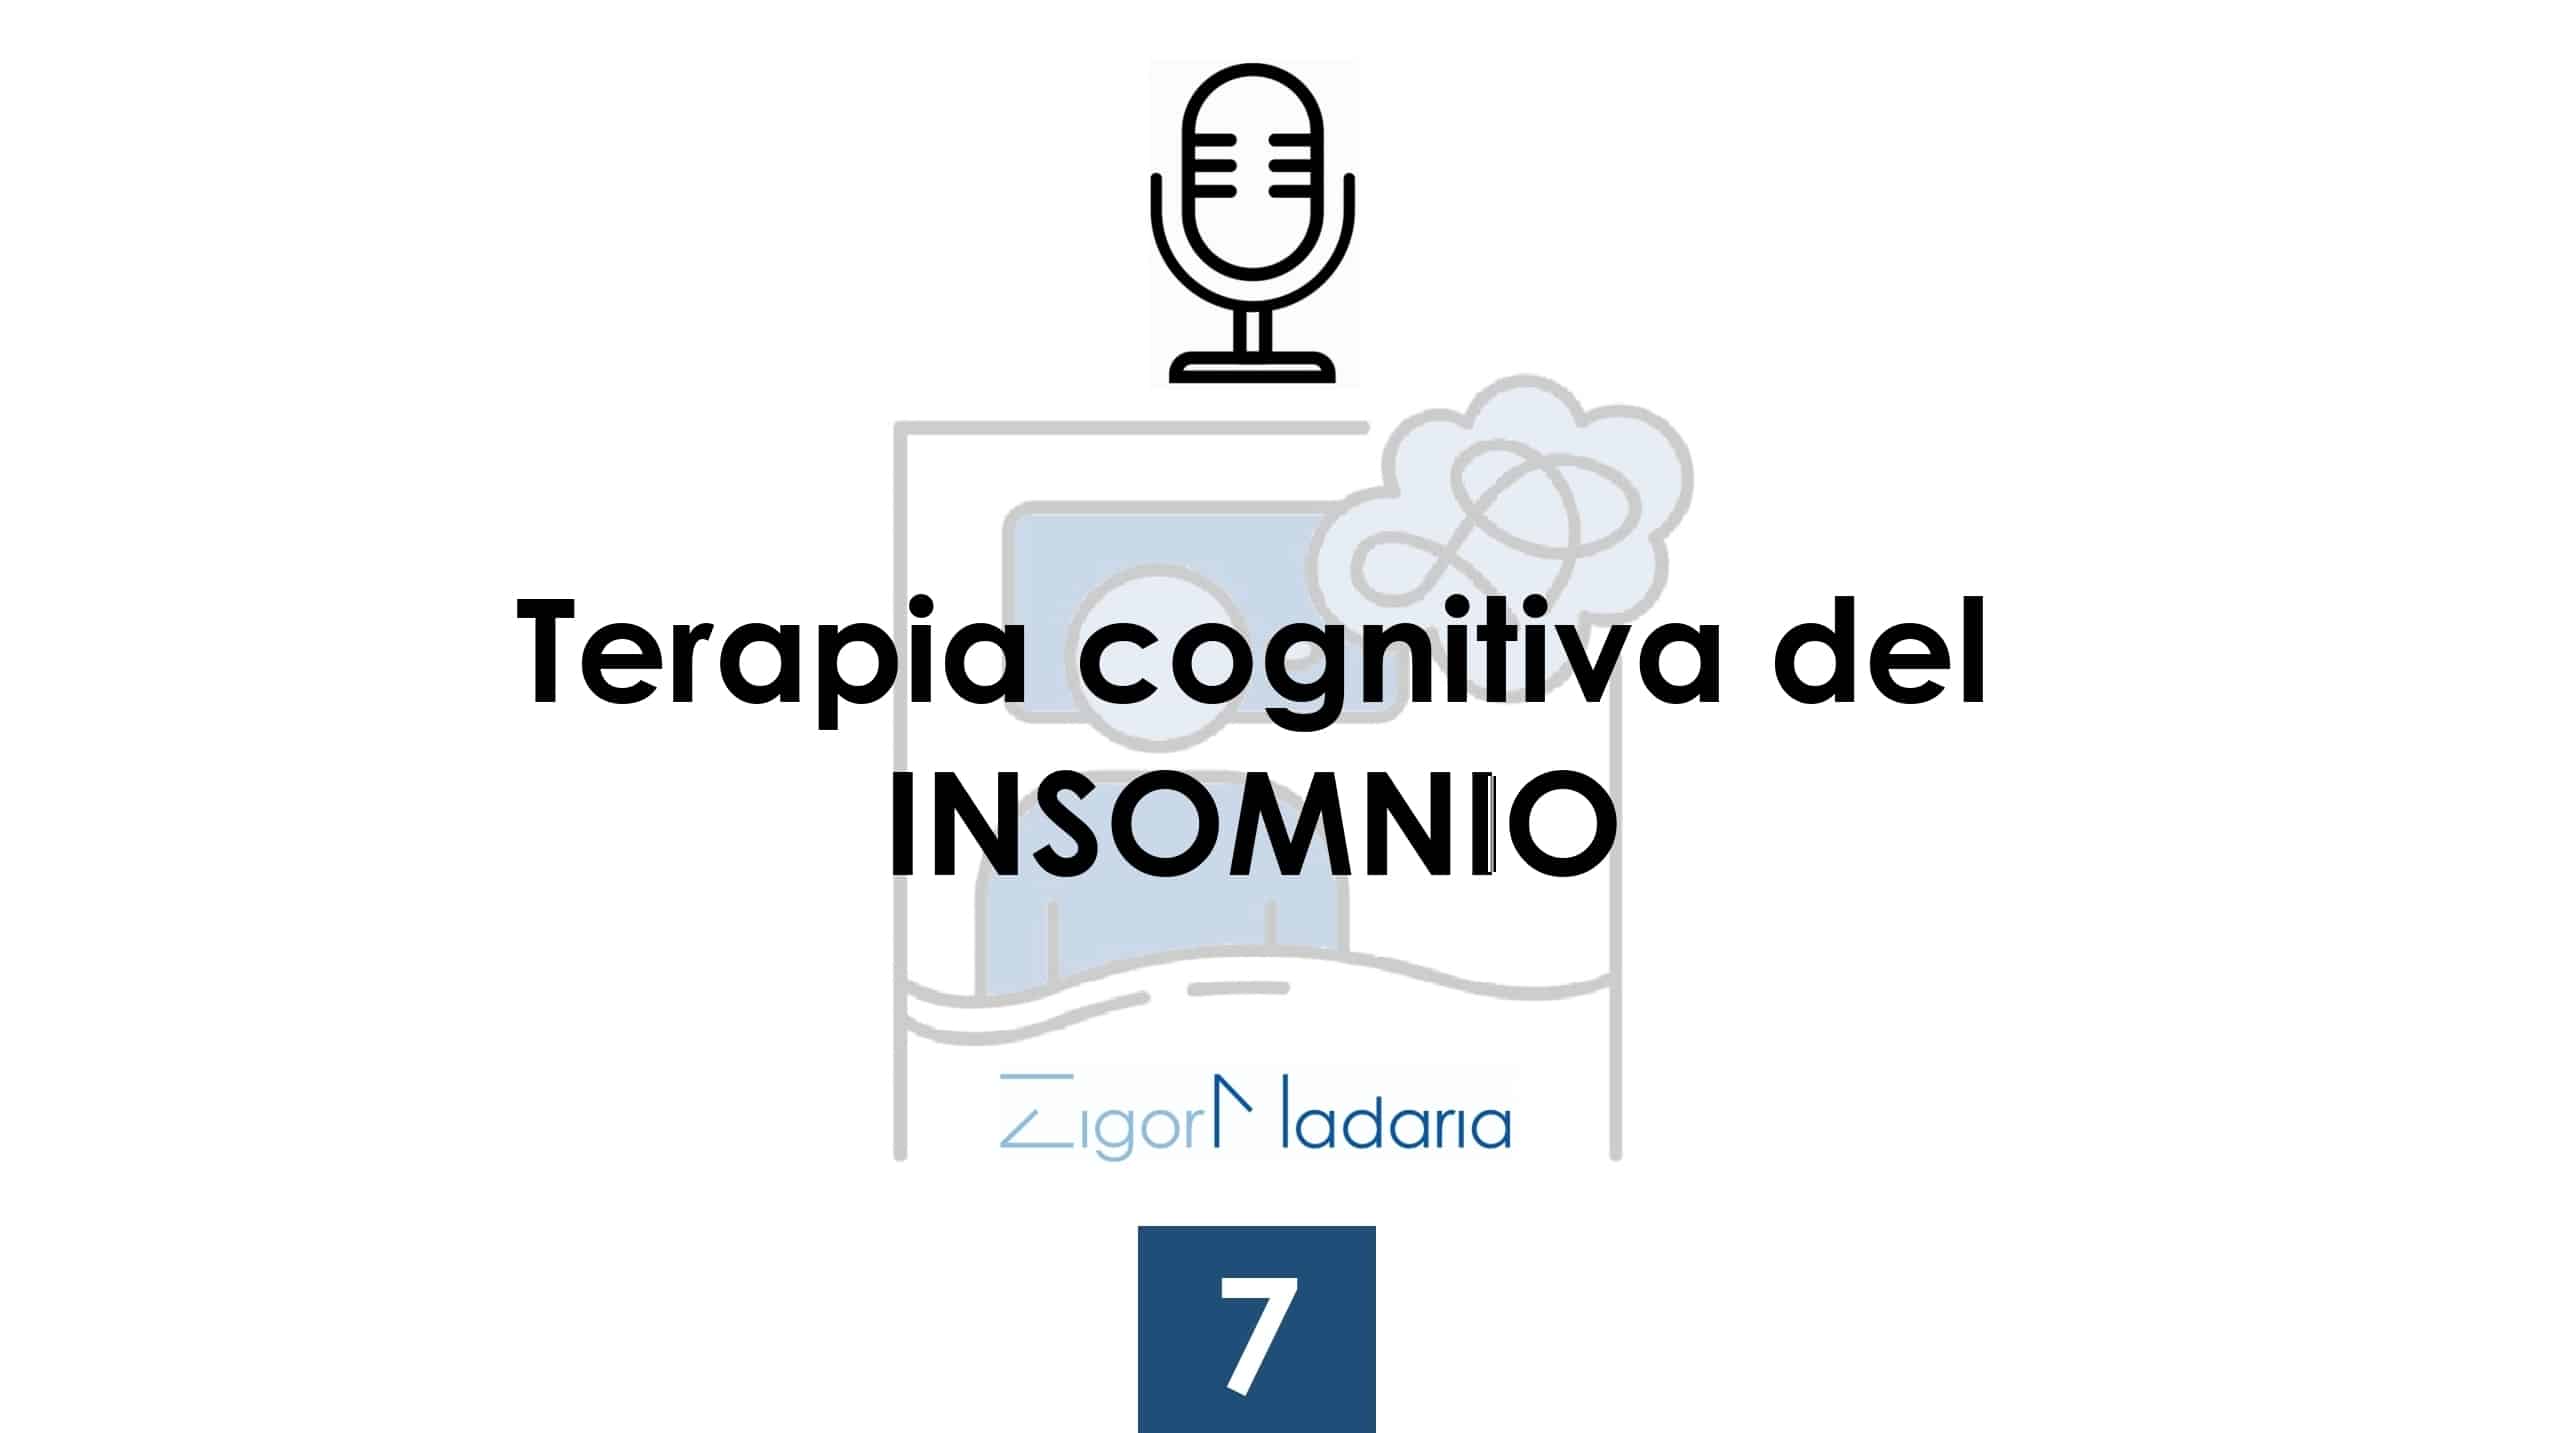 7. La Terapia Cognitiva en la Terapia Cognitivo Conductual del Insomnio